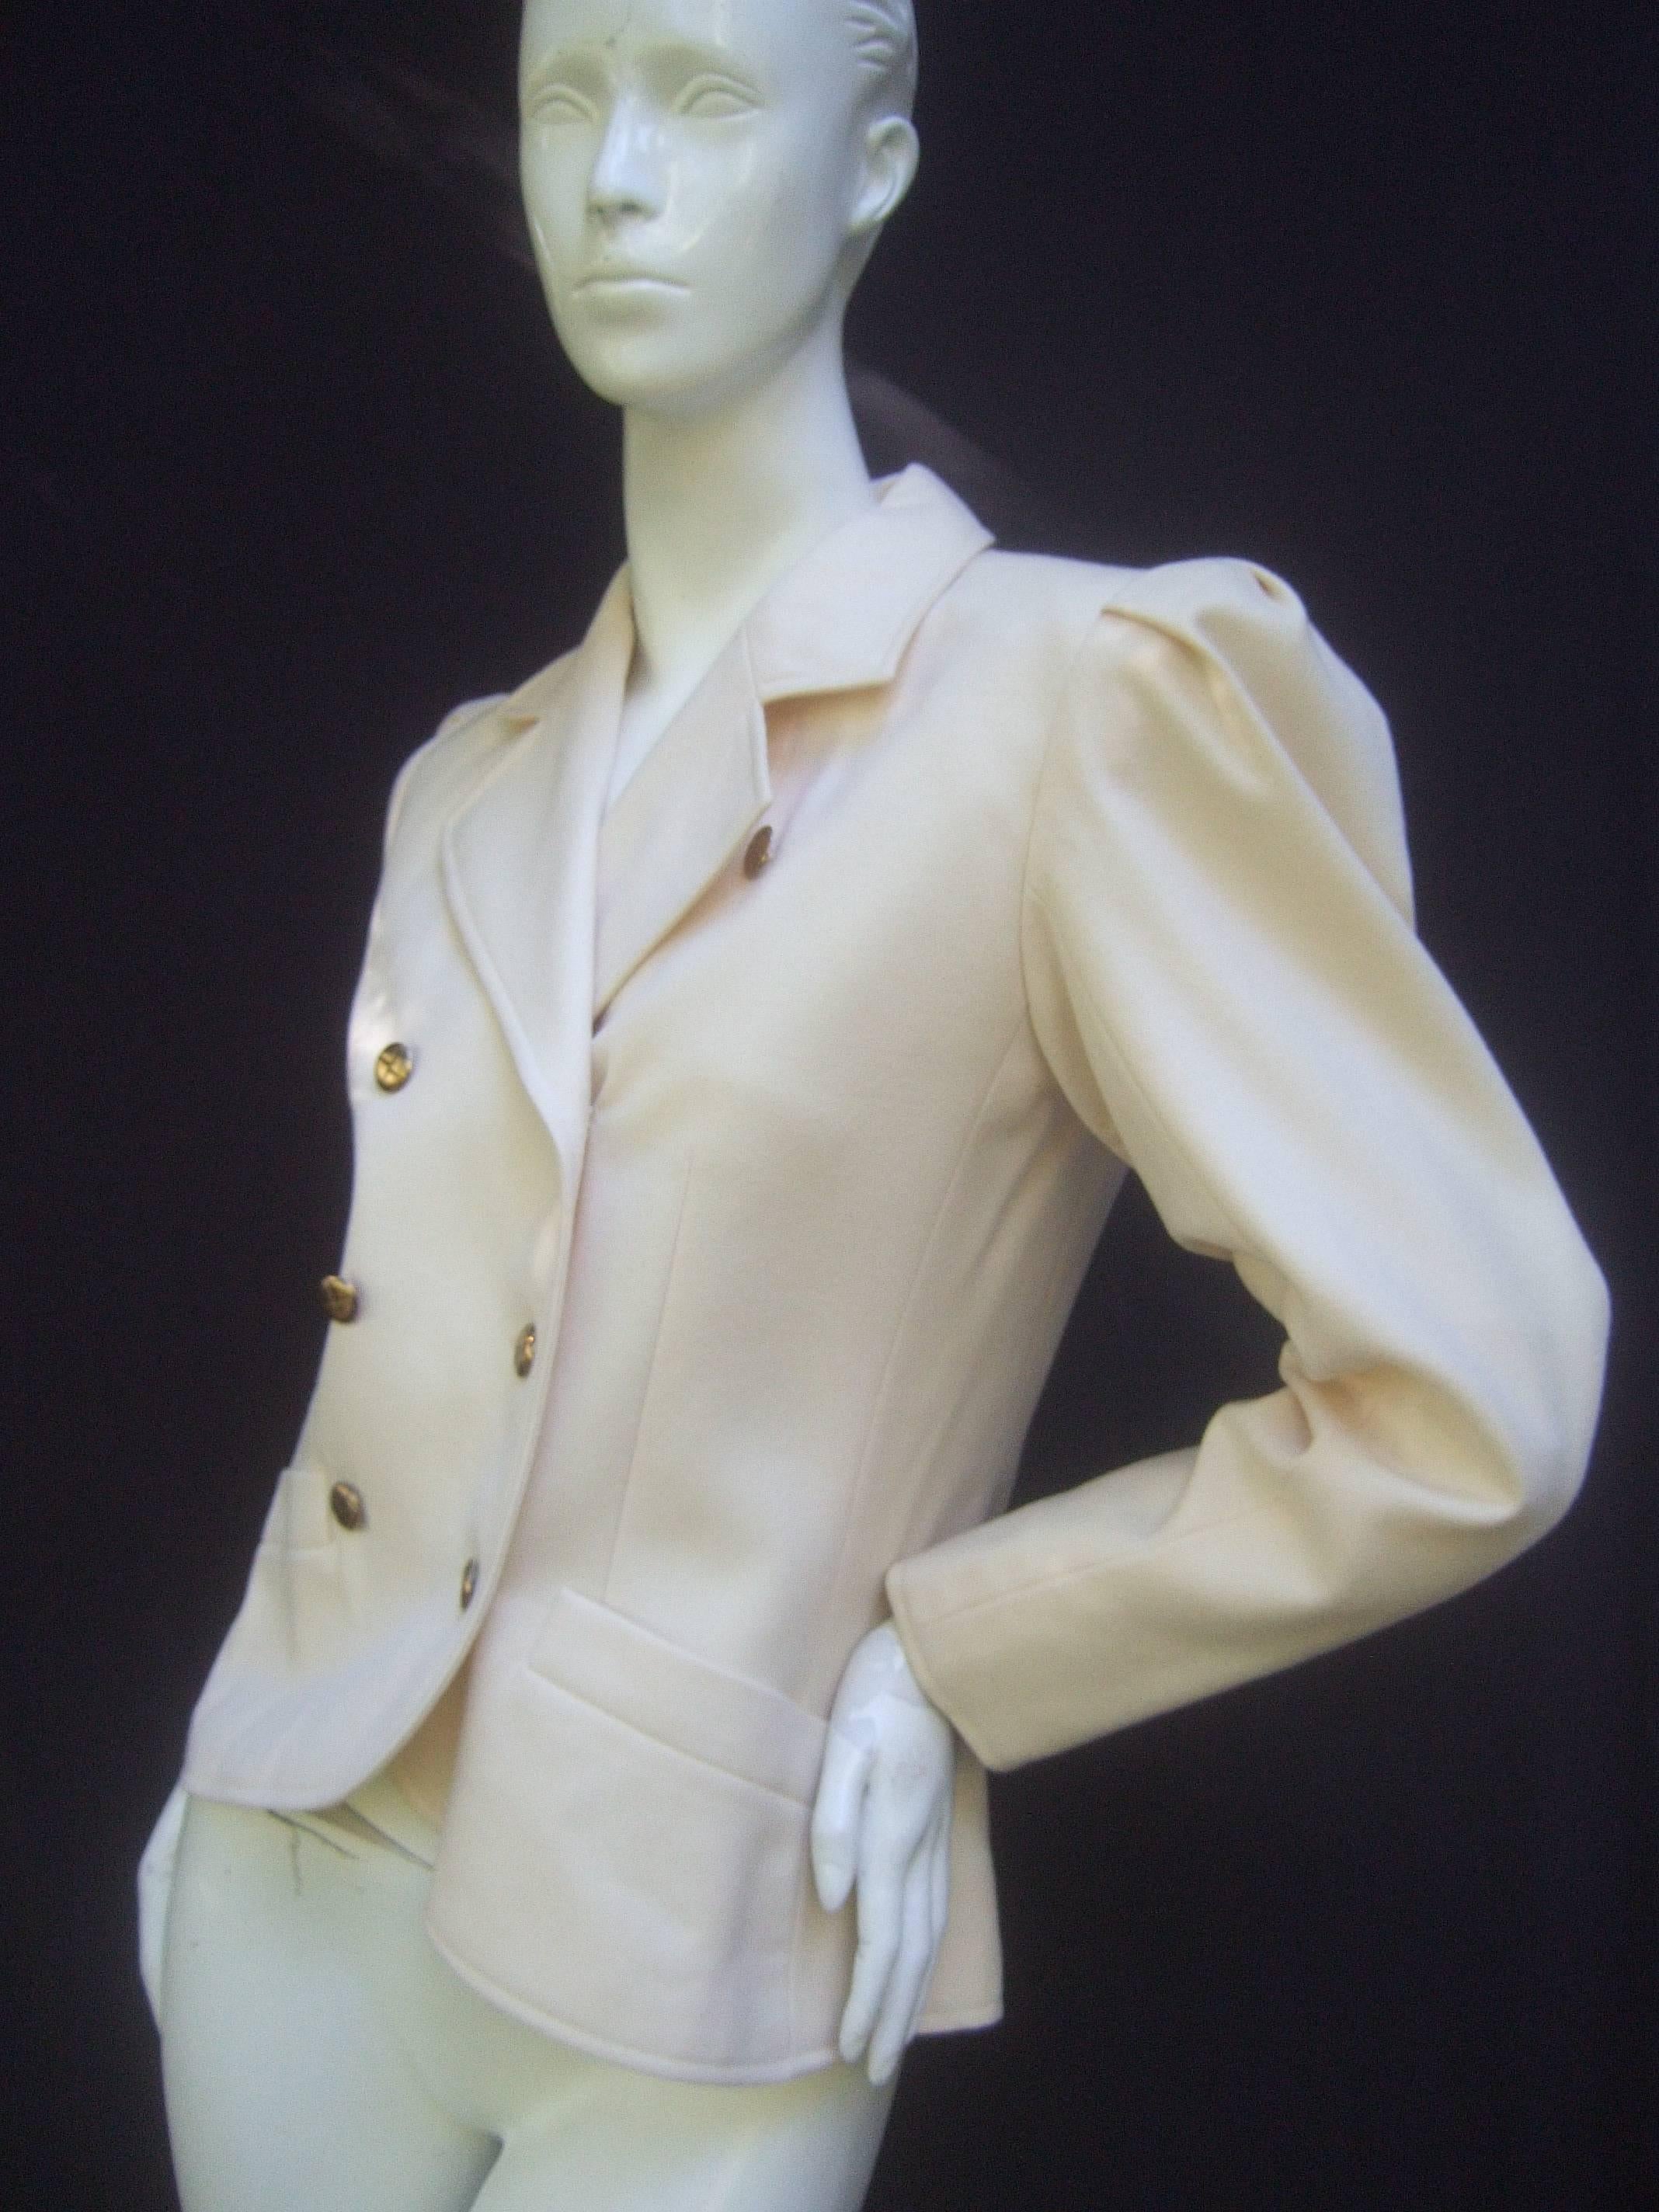 Women's Saint Laurent Rive Gauche Cream Wool Jacket c 1970s   